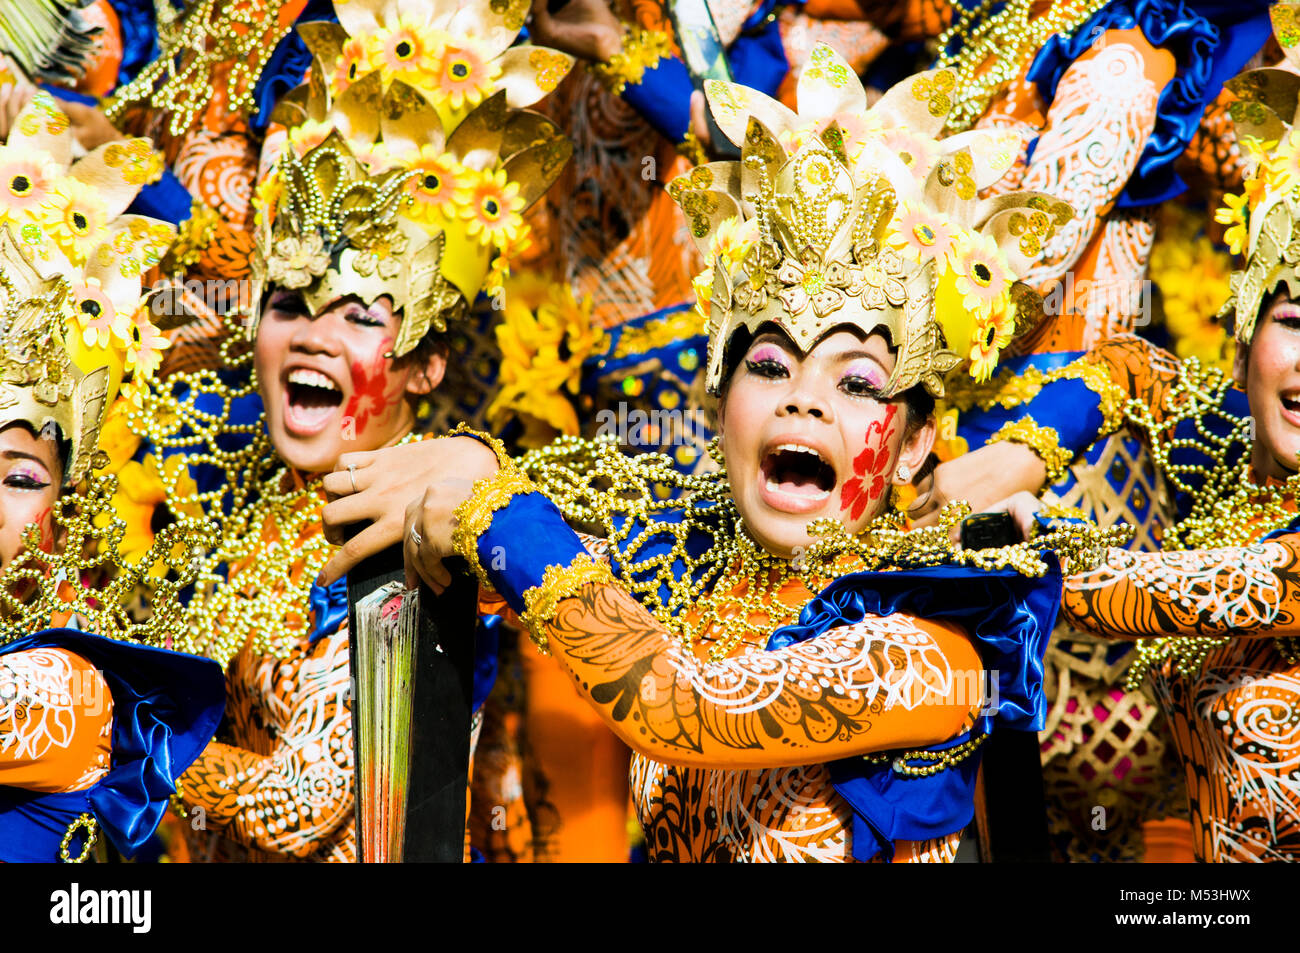 Pintaflores Festival, San Carlos, Negros Occidental, Philippines Stock Photo